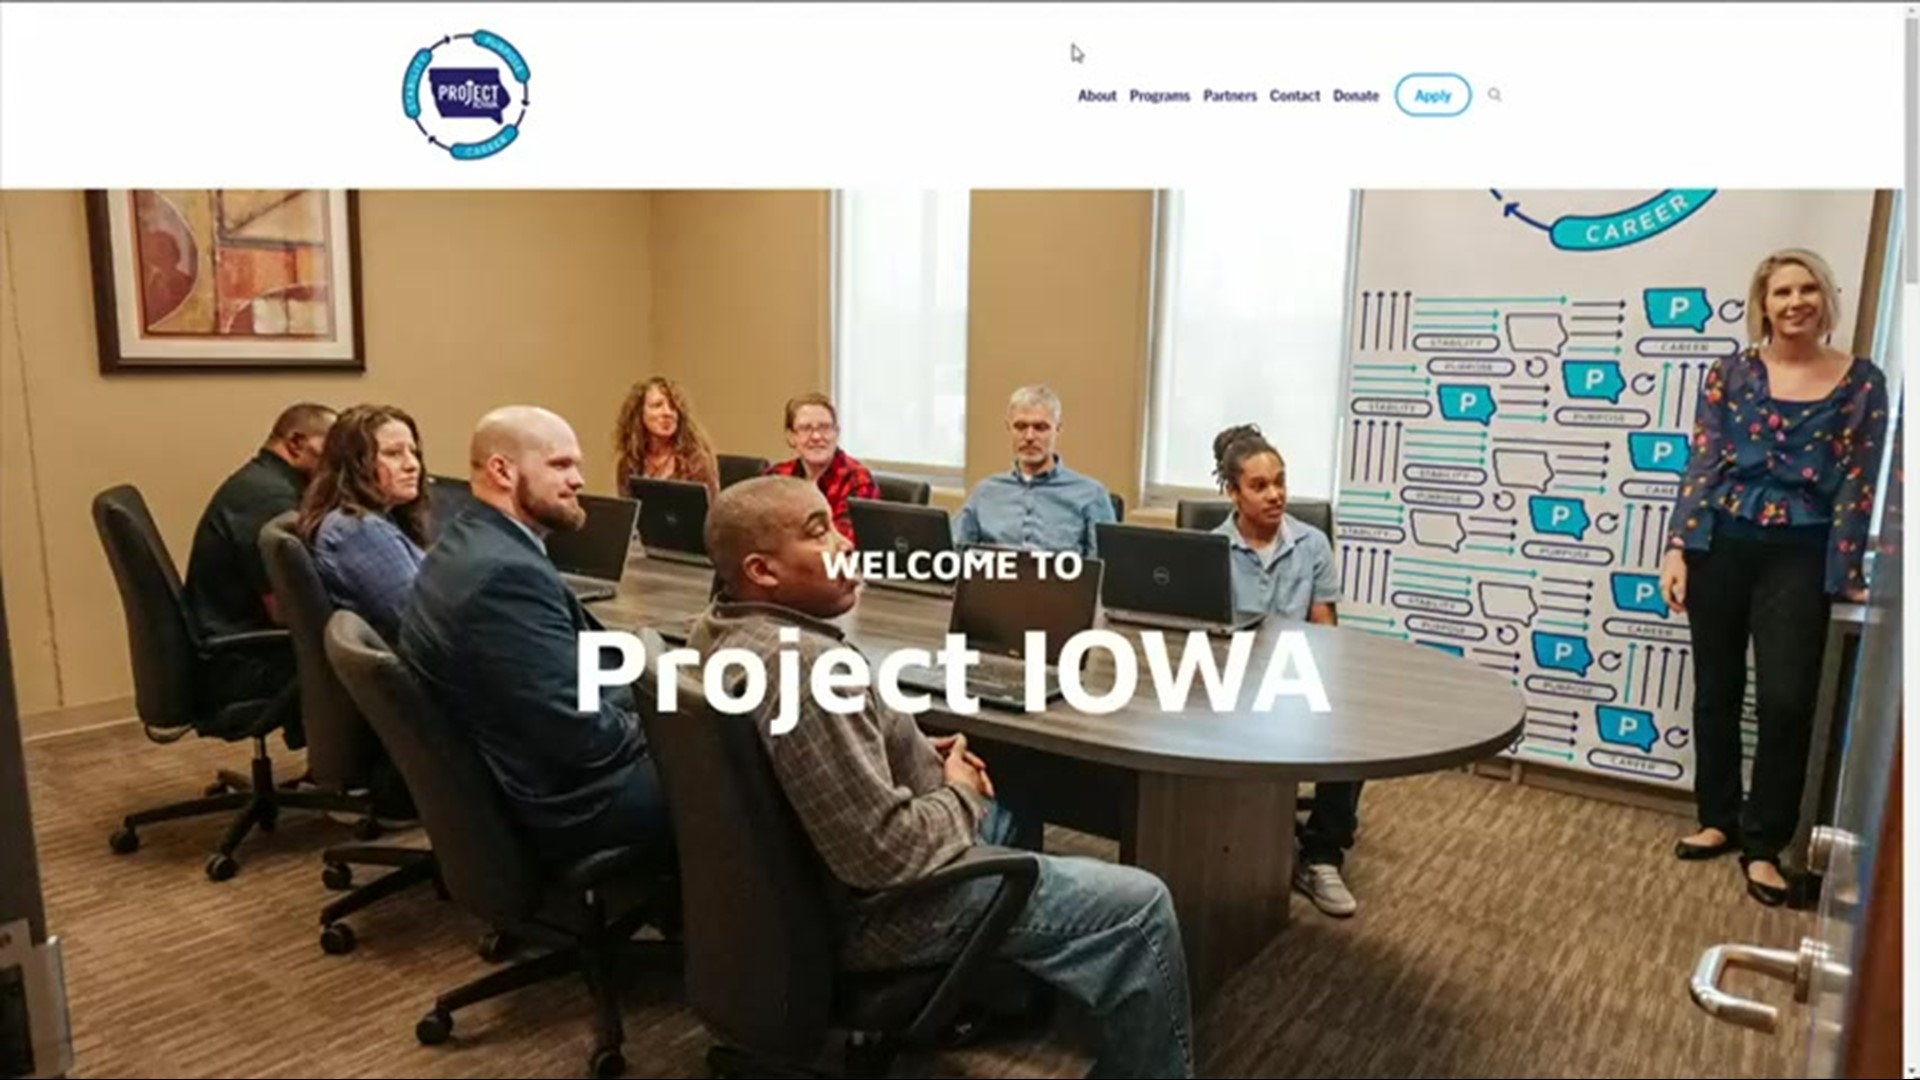 Project Iowa's transformational career program